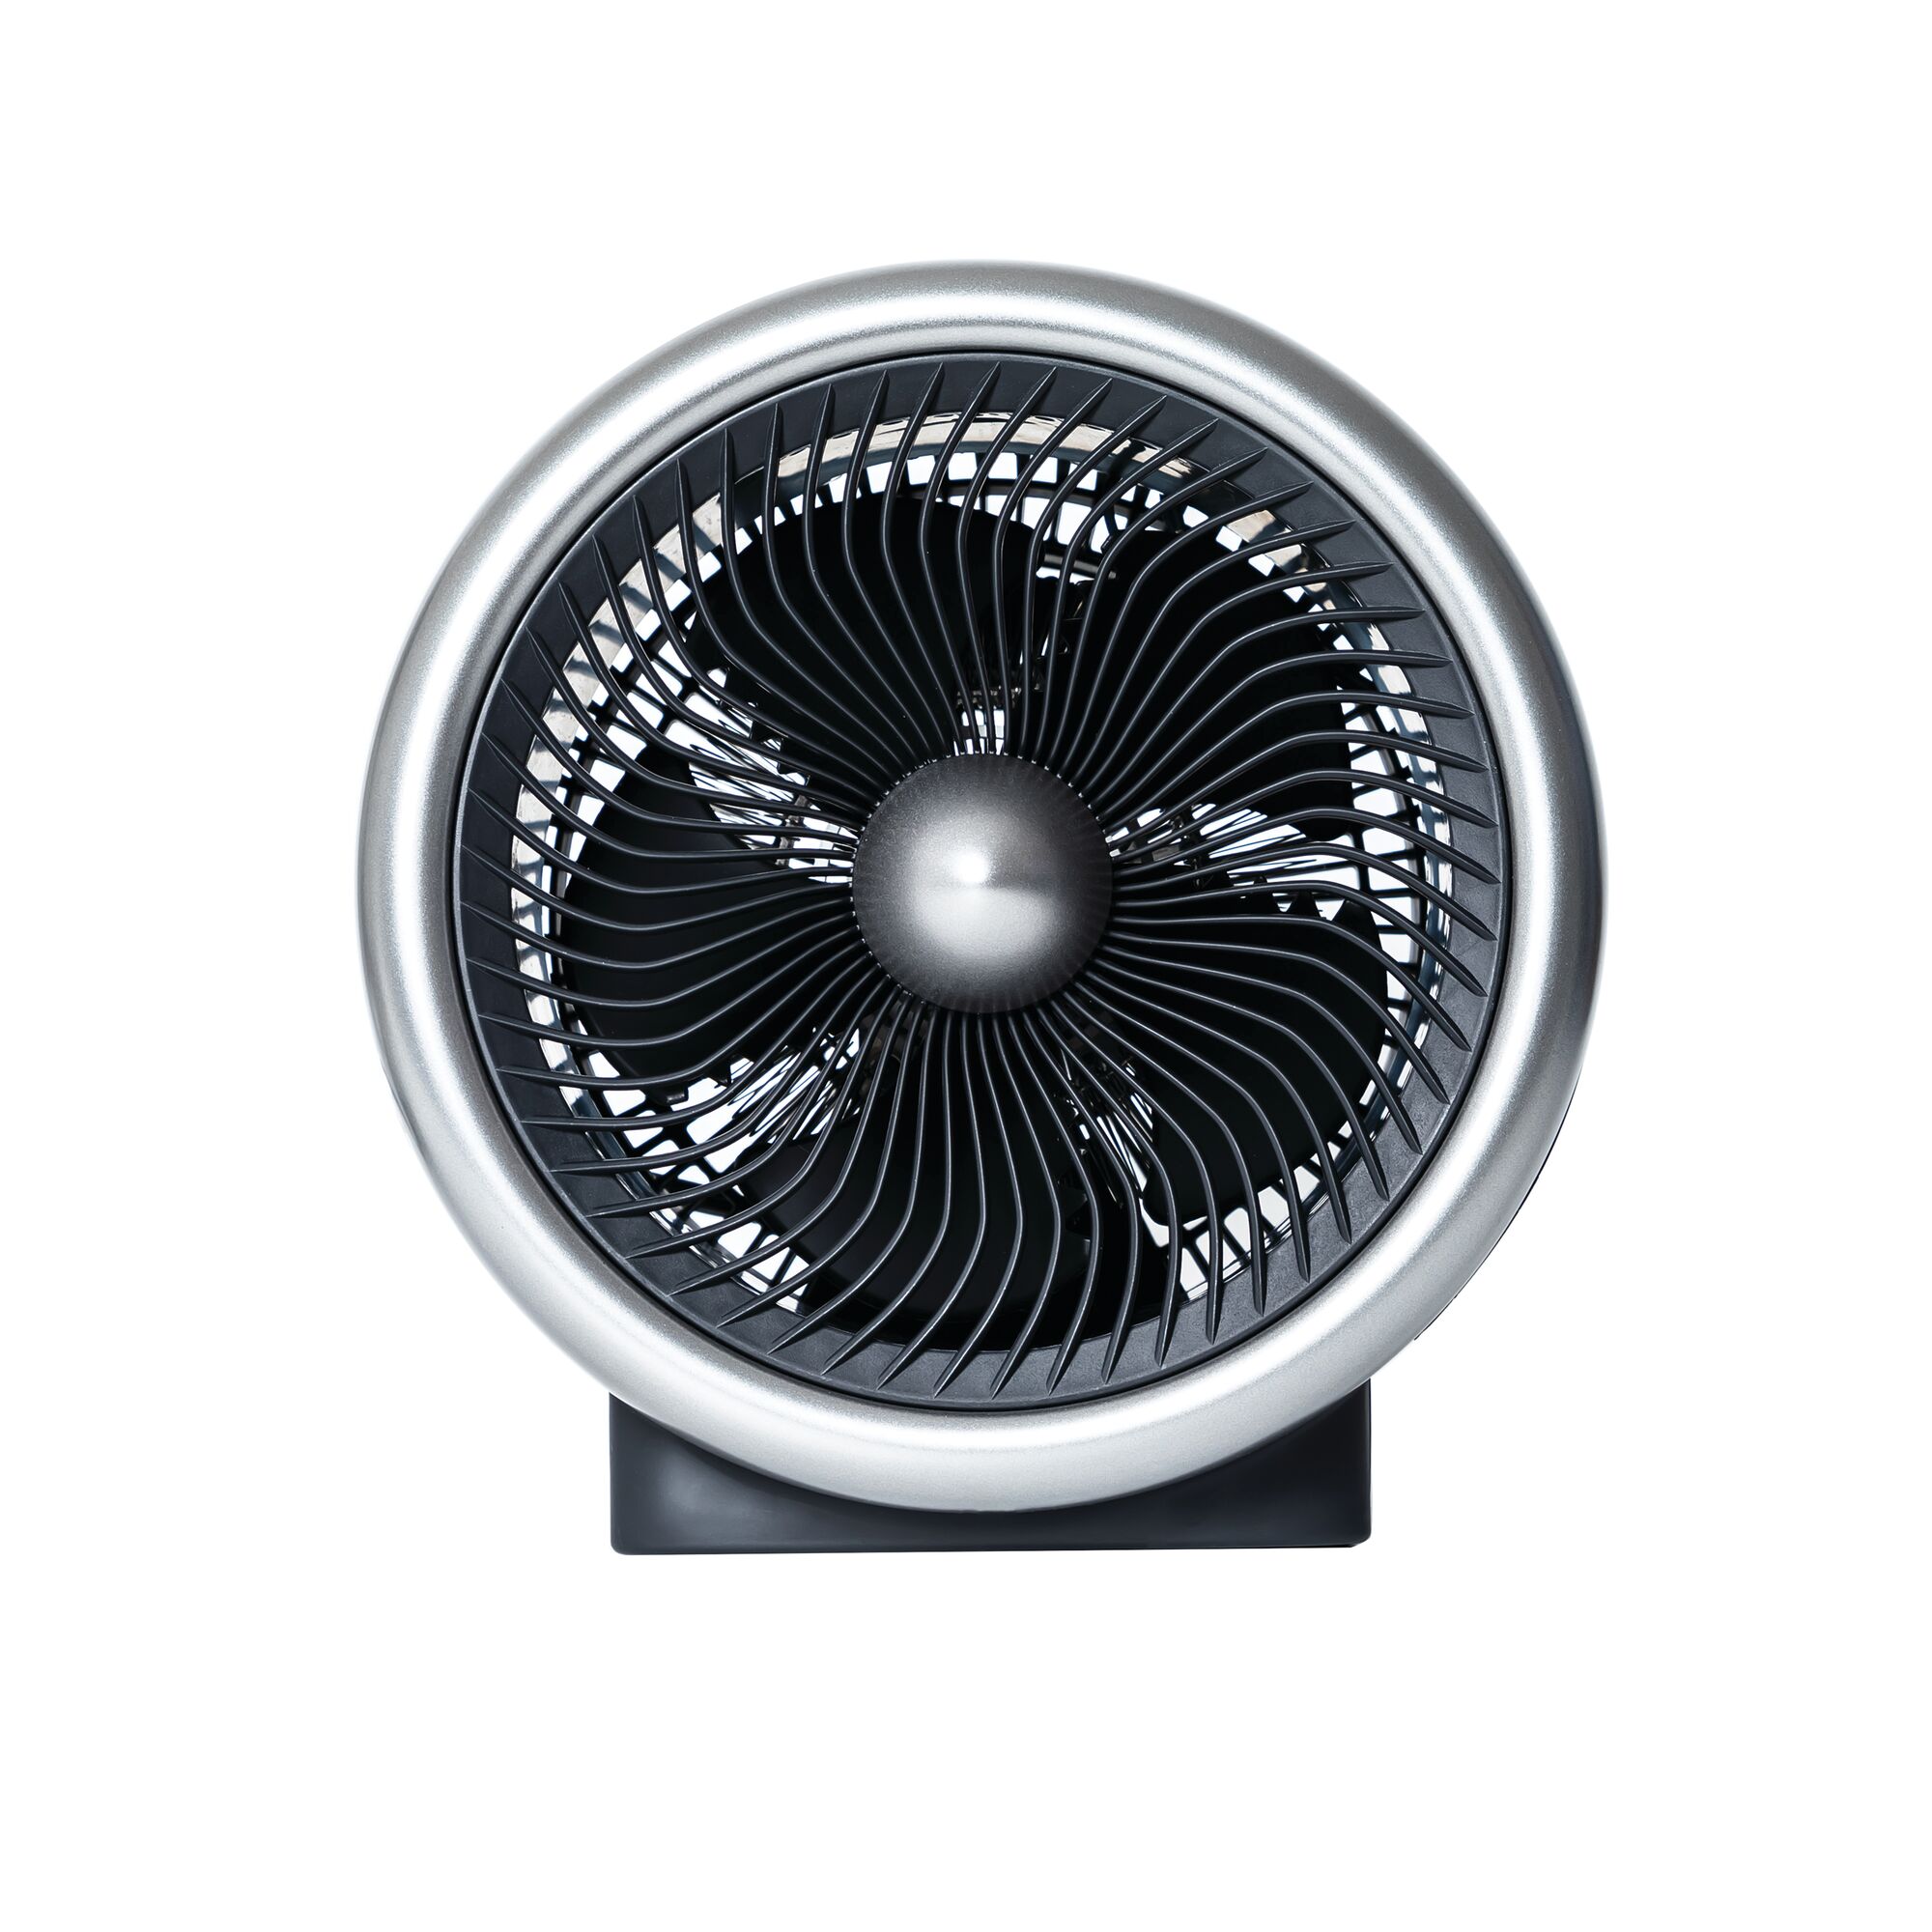 Profile of digital turbo portable heater fan combo 2 in 1 electric personal mini space heater.